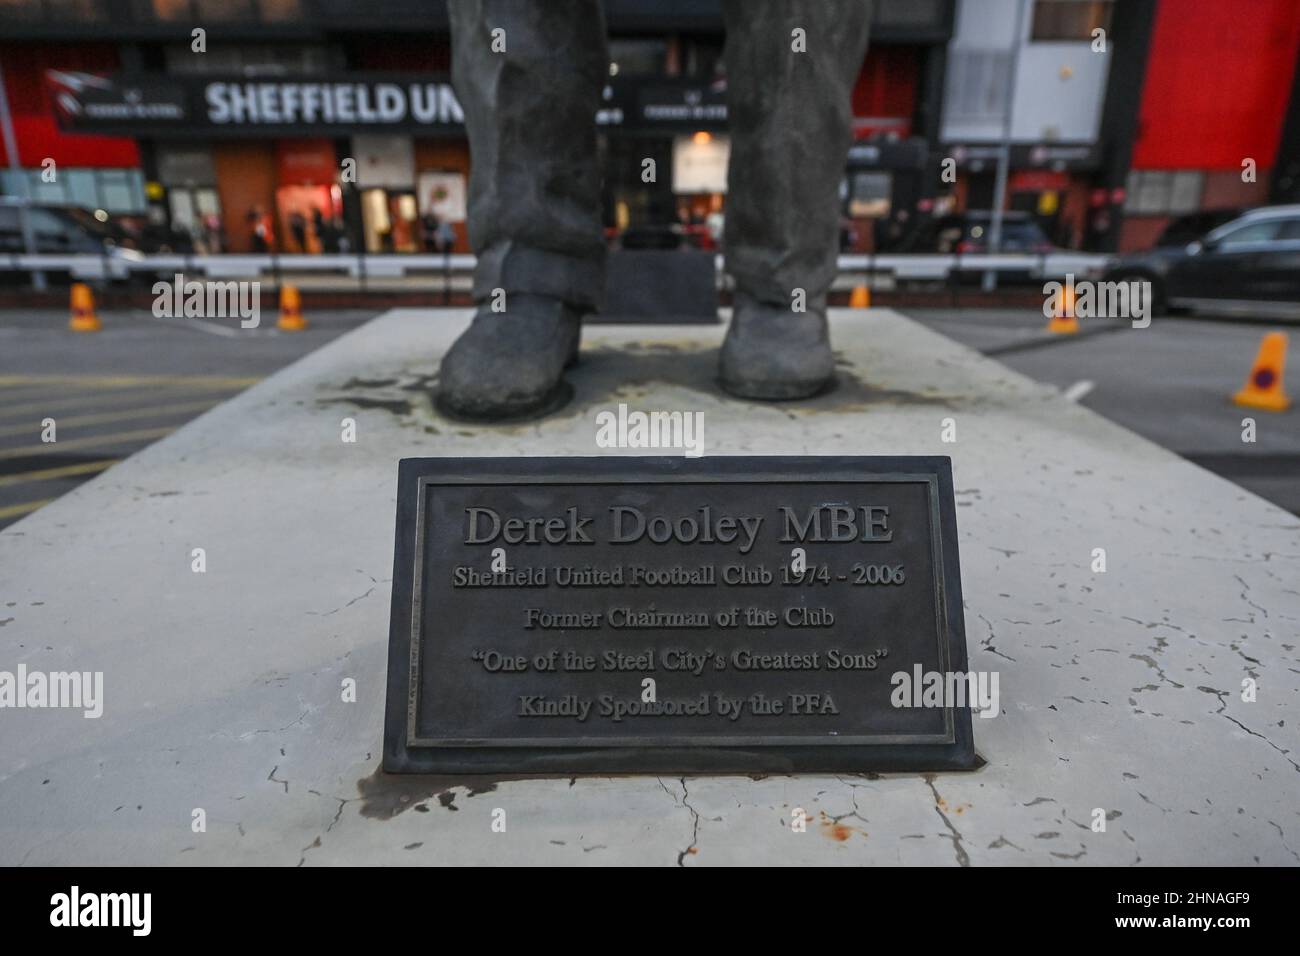 The Derek Dooley MBE statue plaque at Bramall Lane Stock Photo